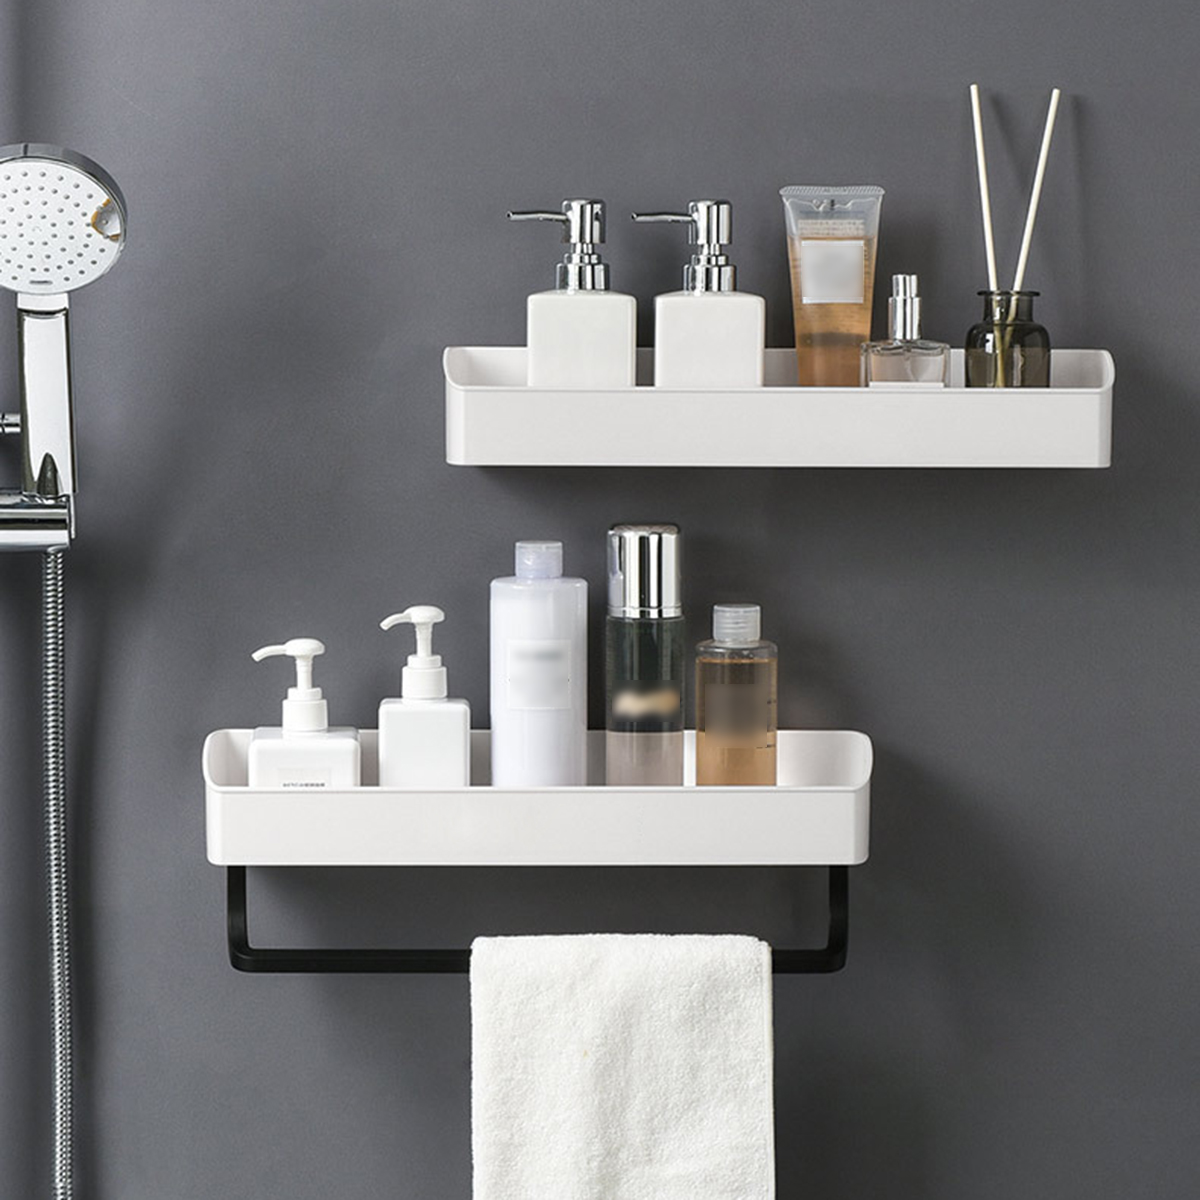 Bathroom-Wall-Mounted-Kitchen-Storage-Rack-Towel-Shelf-Organizer-Shower-Shampoo-Holder-1663521-4